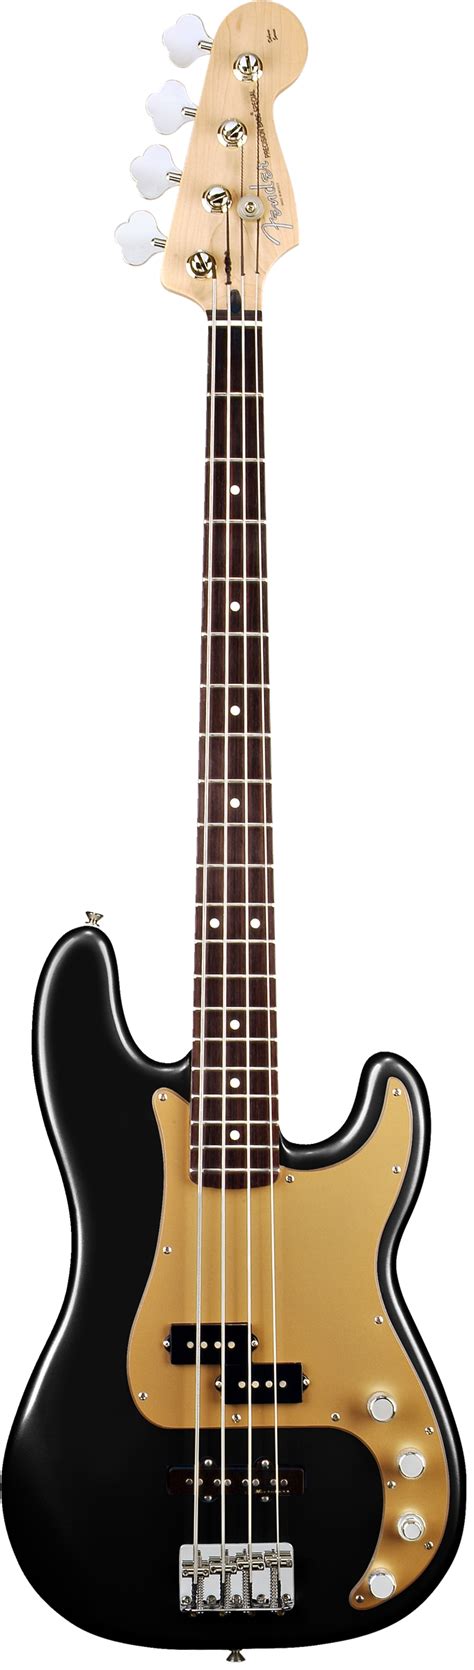 Fender Deluxe Active P Bass Special | Bass guitar, Fender precision bass, Acoustic bass